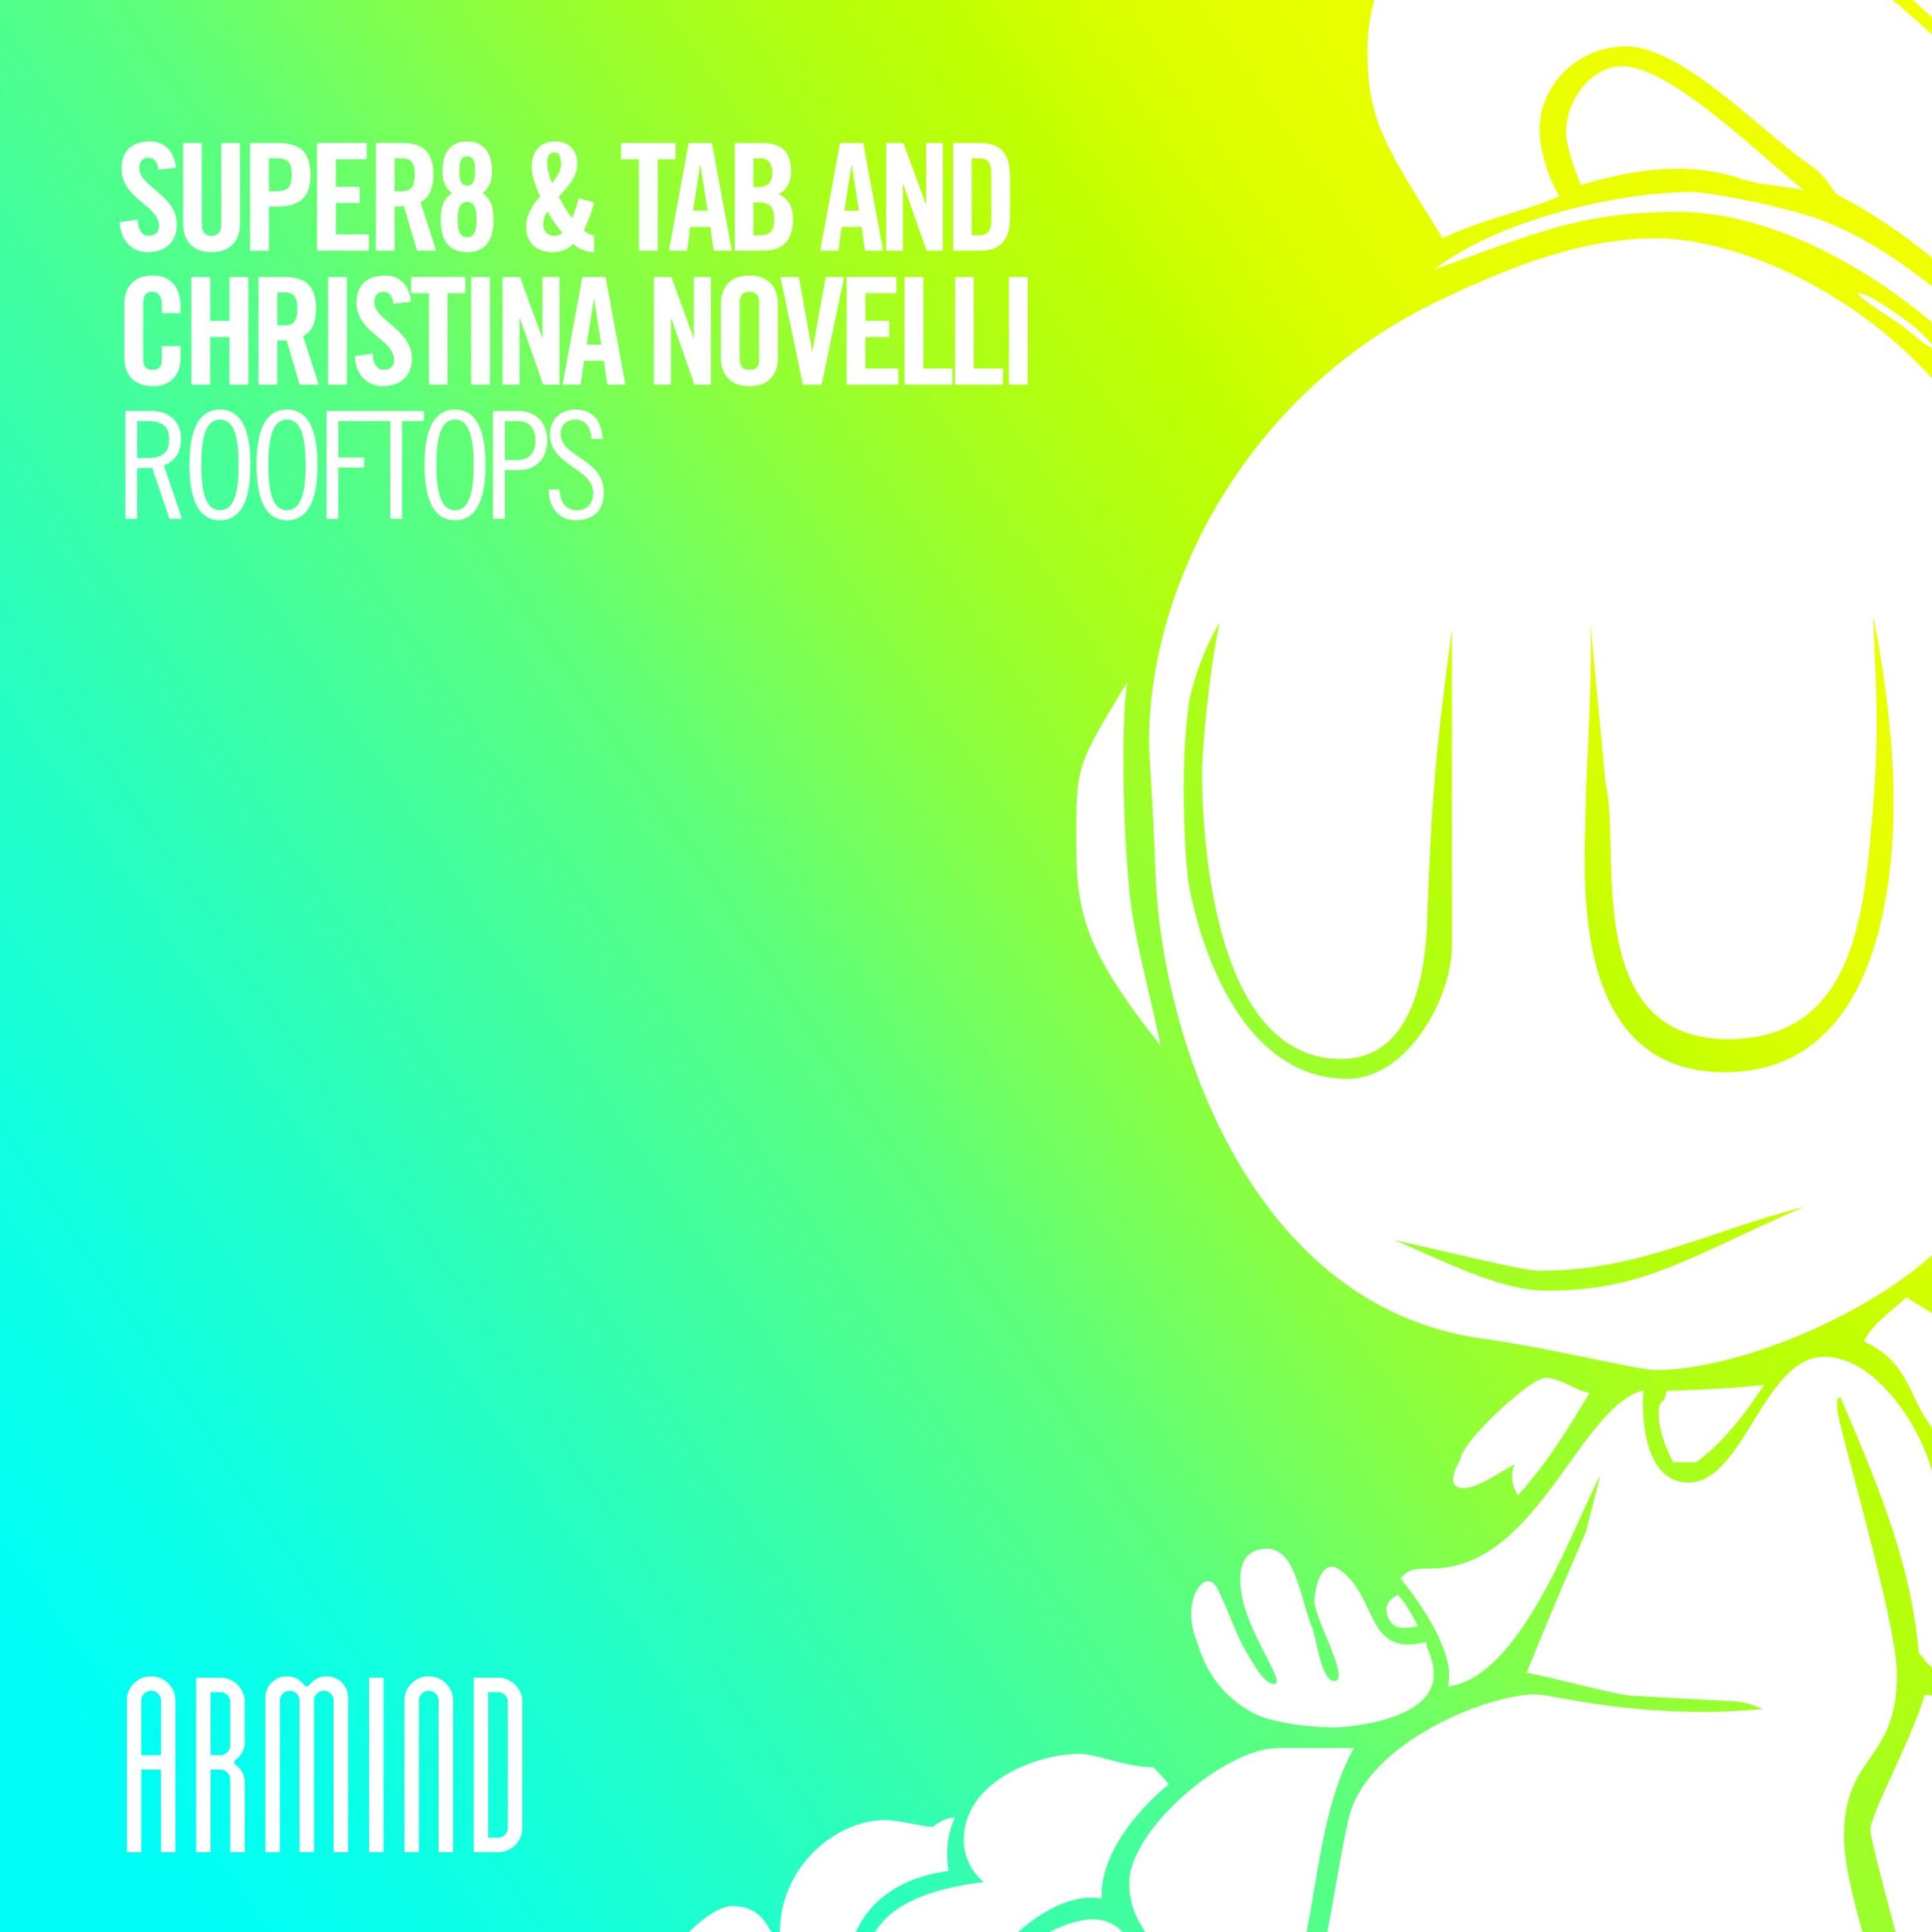 Super8 & Tab and Christina Novelli presents Rooftops on Armada Music